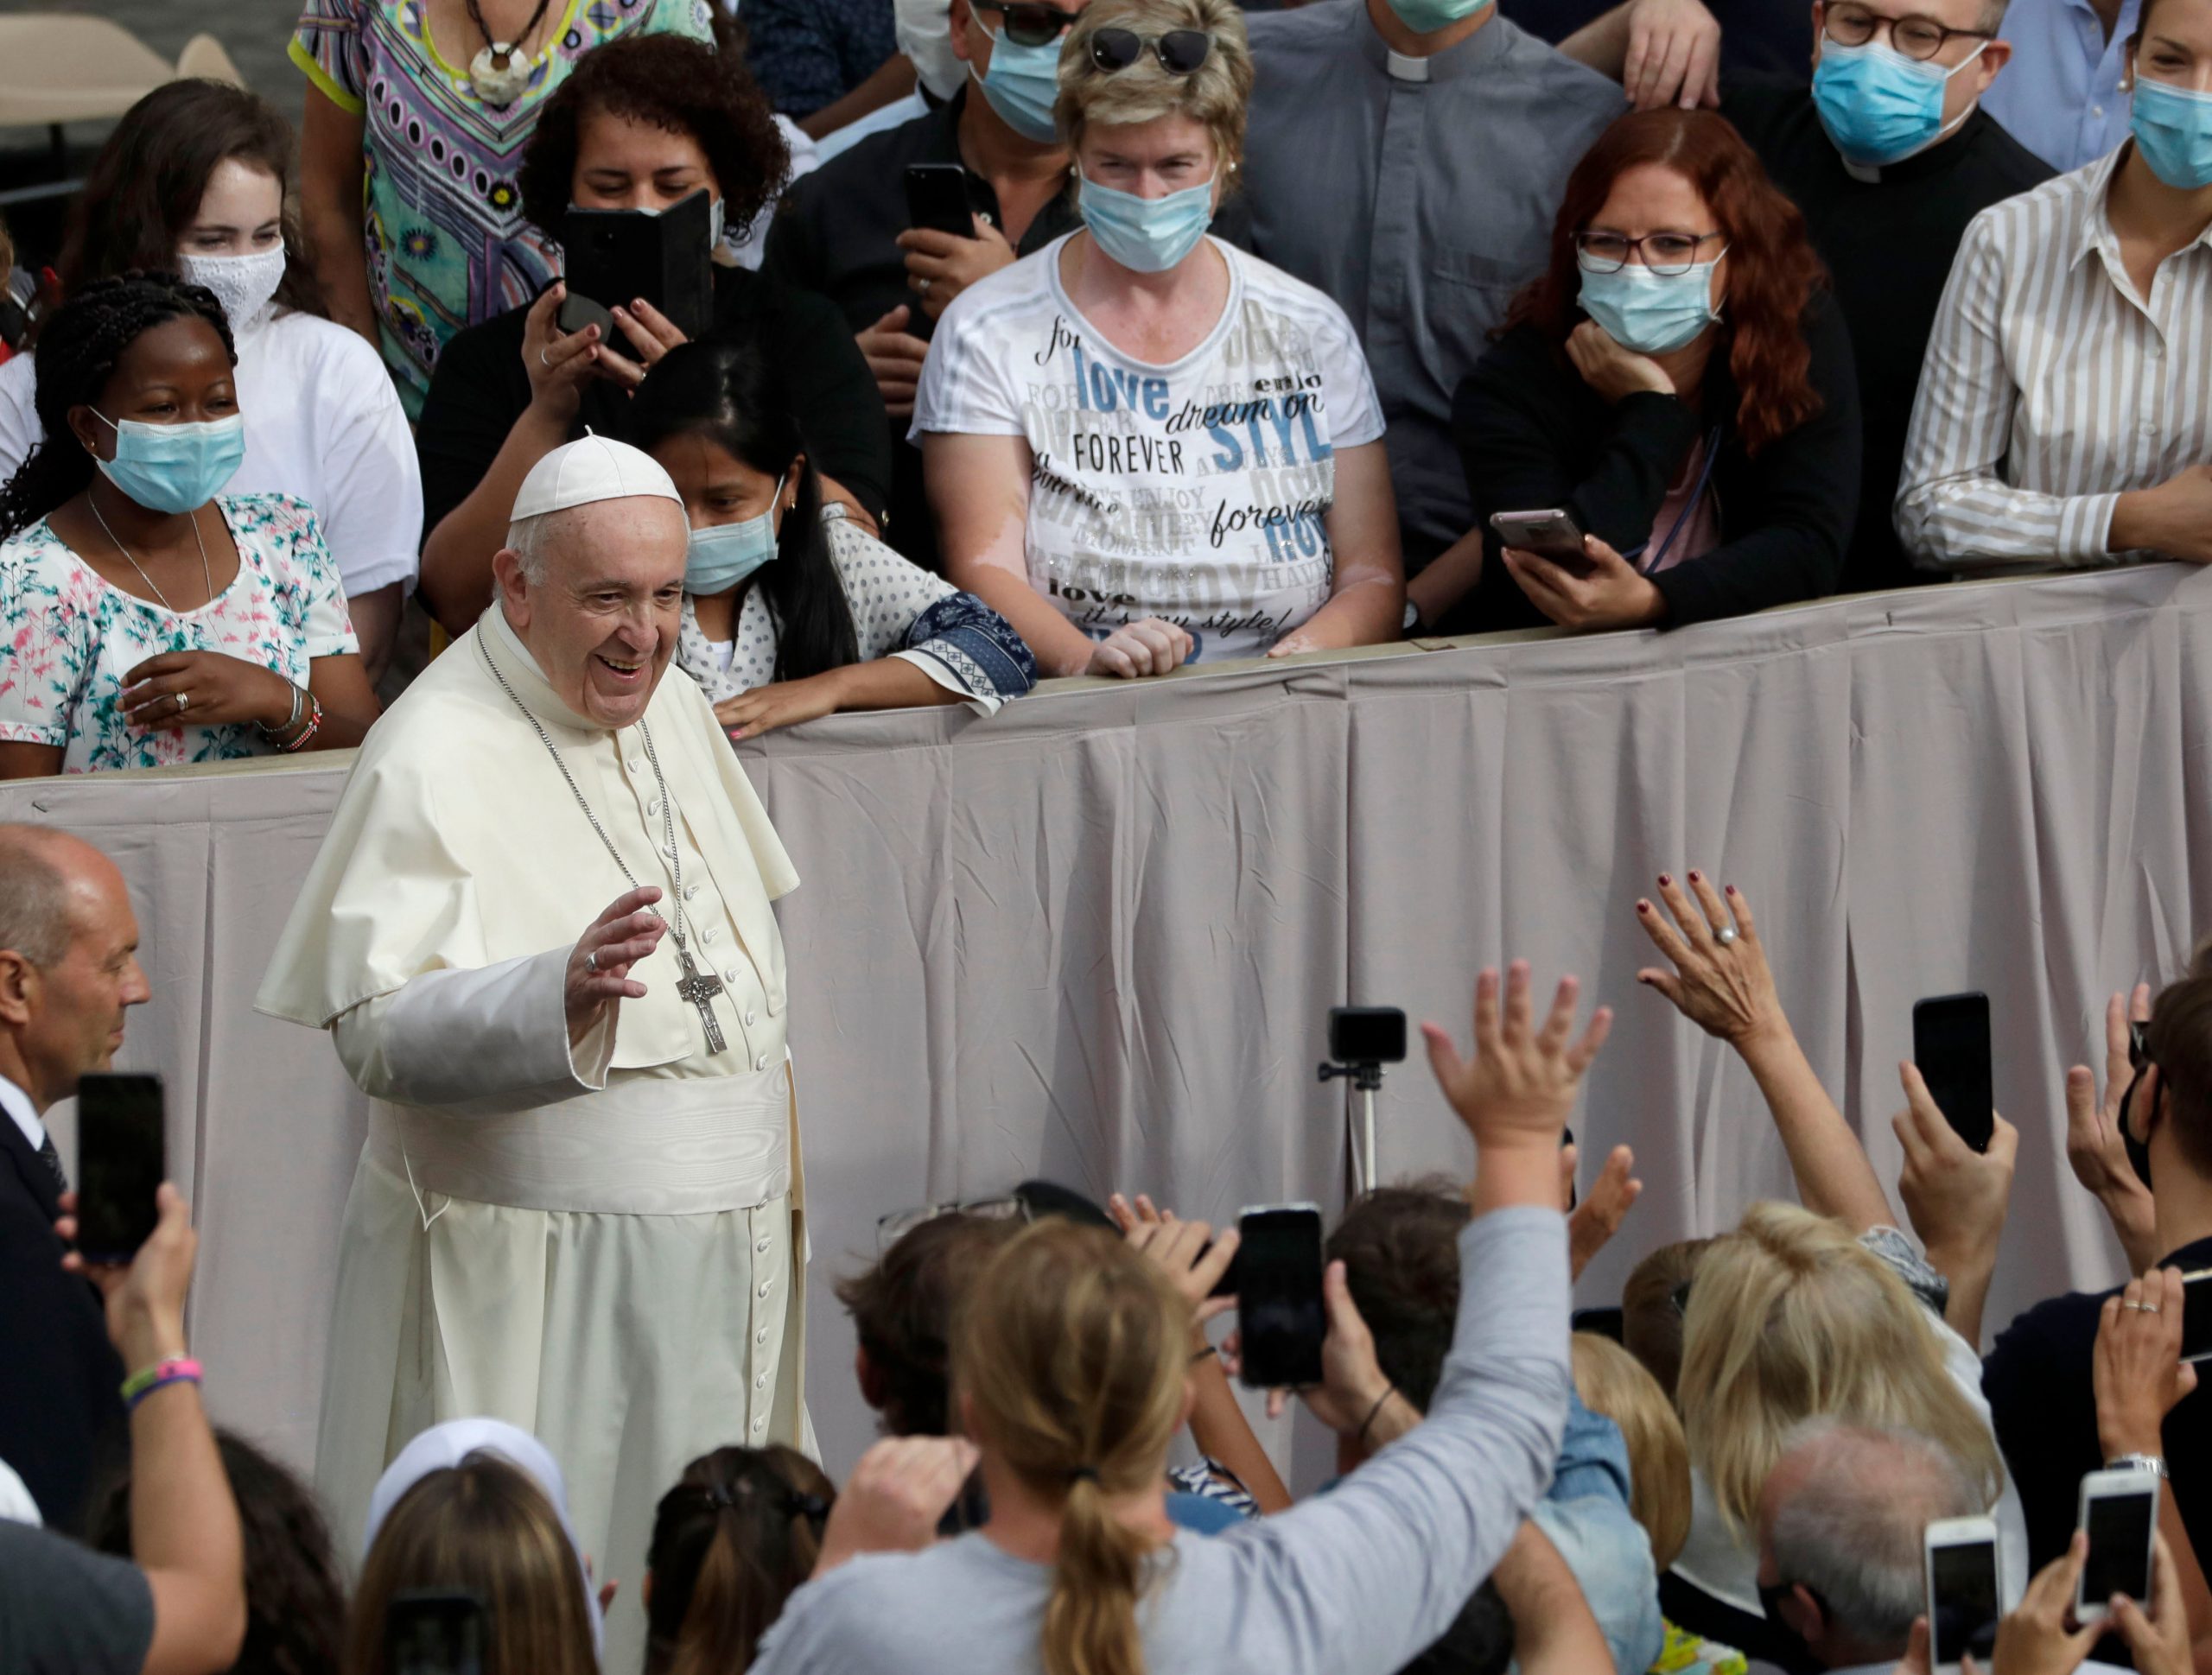 Vaccination in Vatican begins, Pope Francis, former Pope Benedict receive jabs